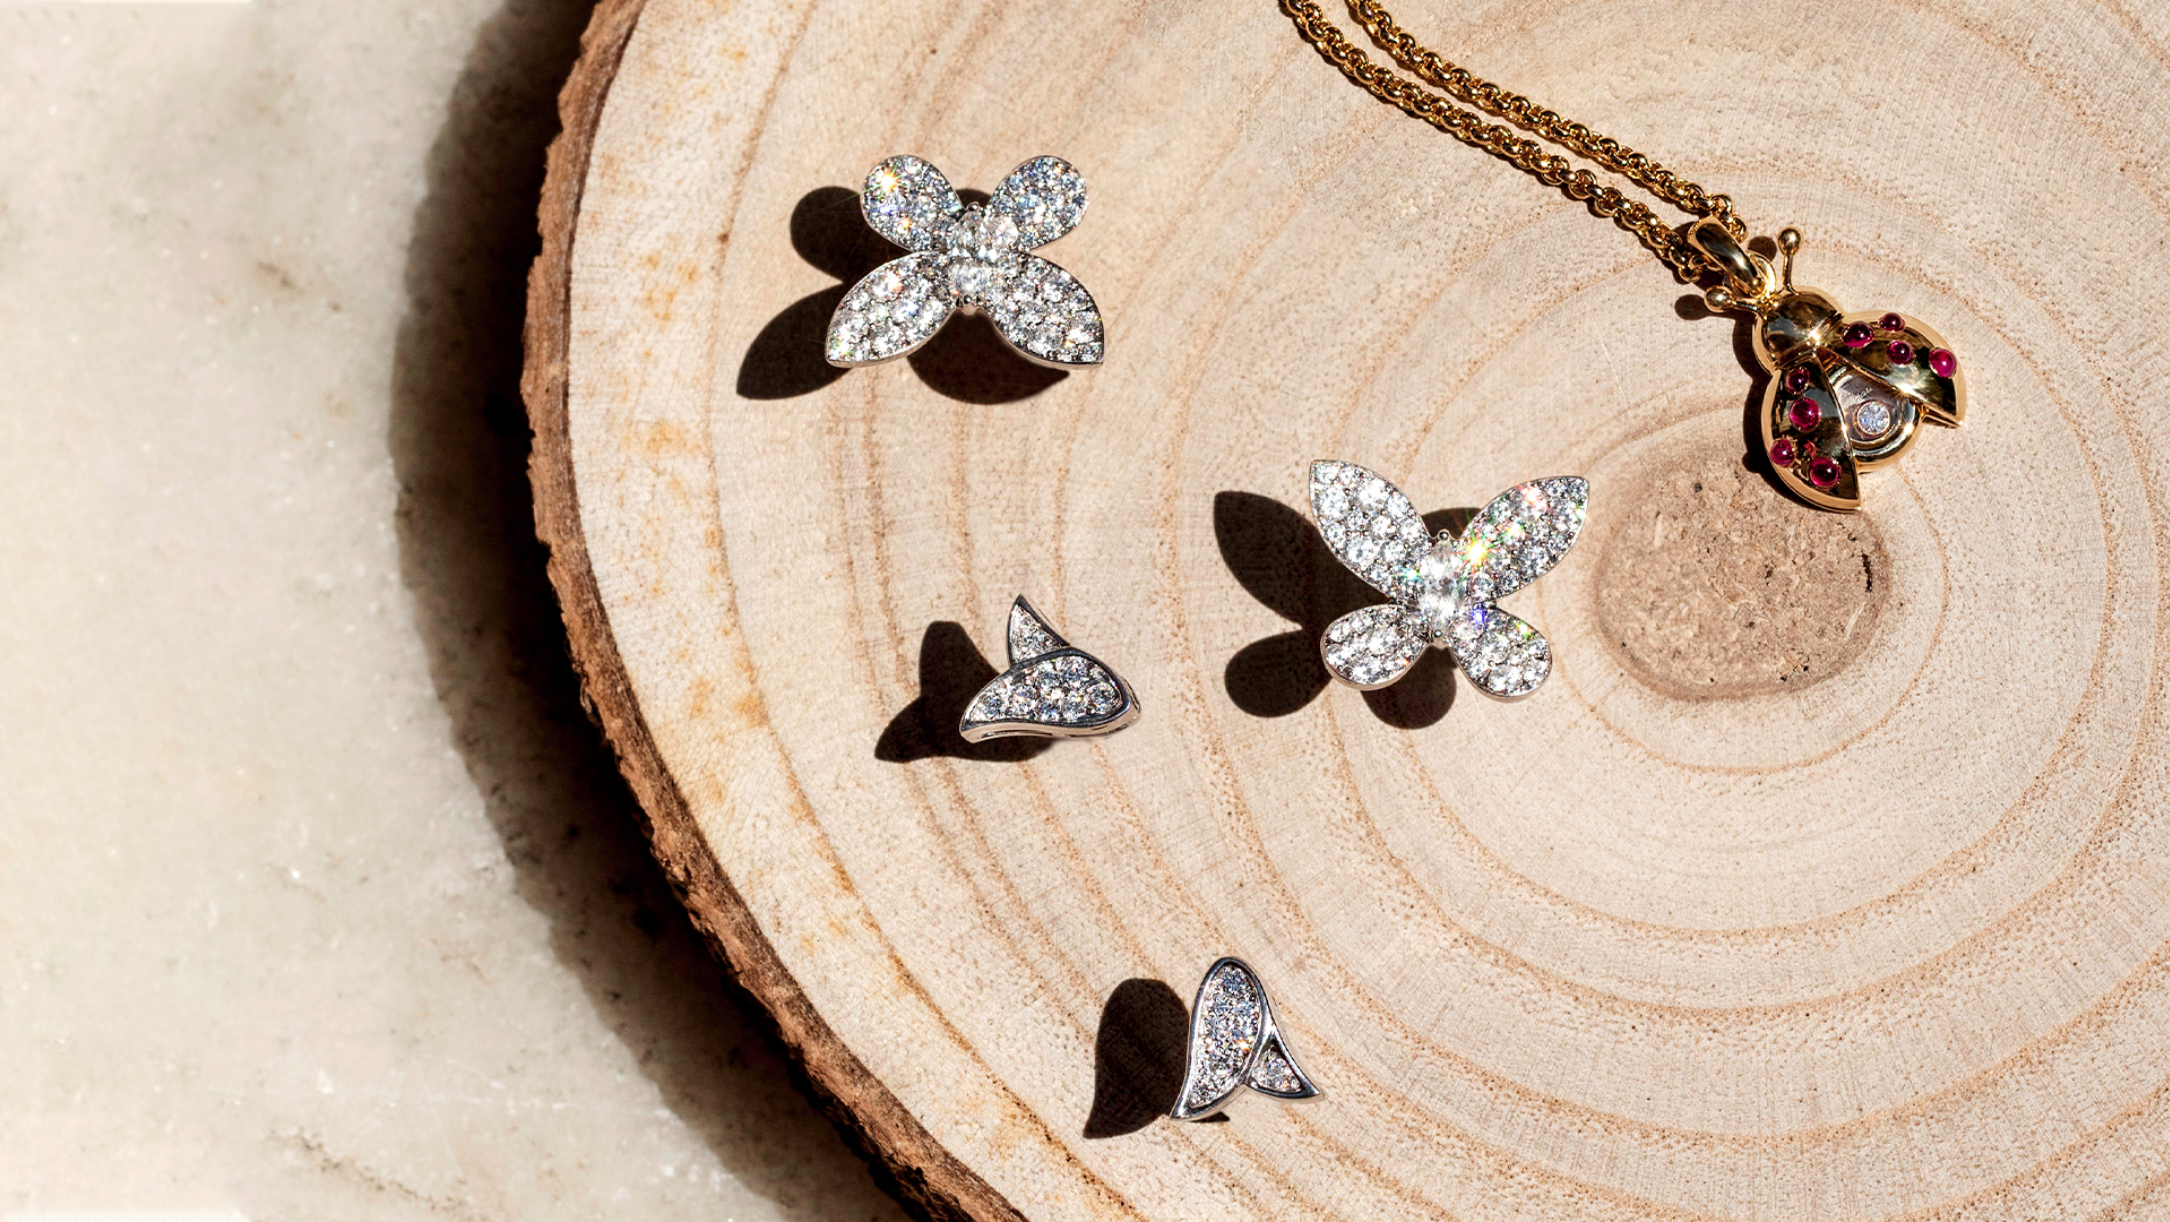 Idylle Blossom Diamond Drop Charm Stud Earrings Gold Single Flower